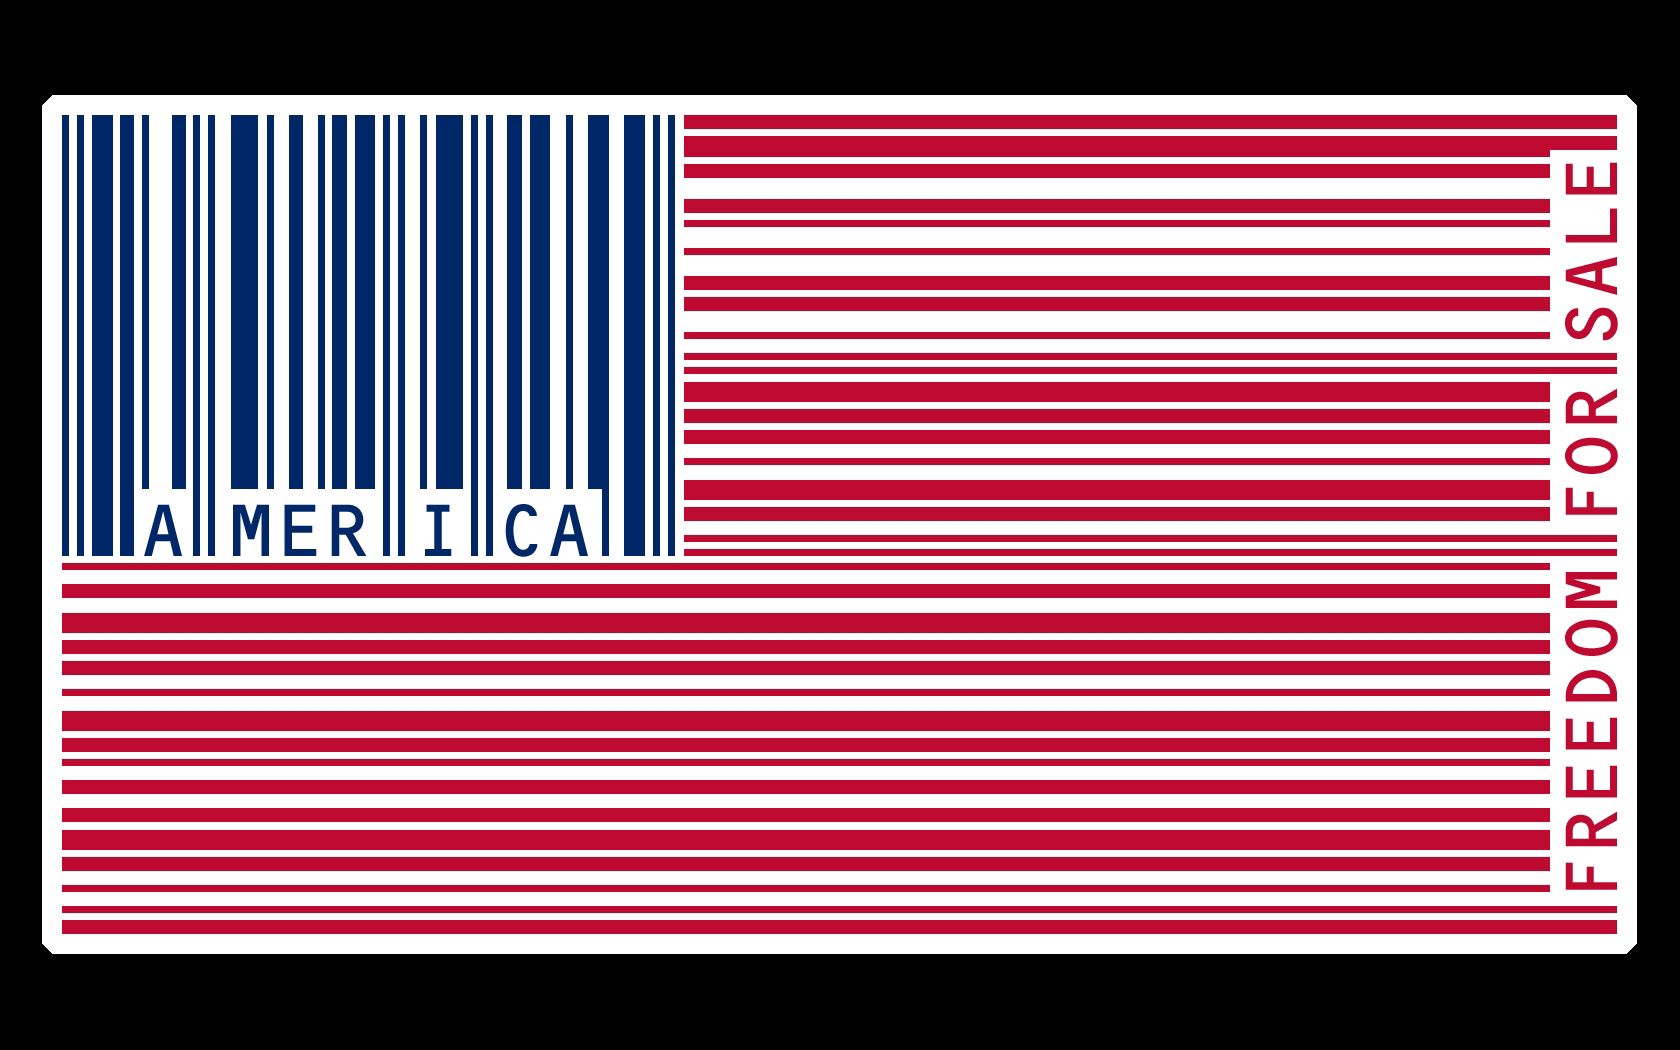 white, blue, red, miscellanea, miscellaneous, america, barcode, bar code